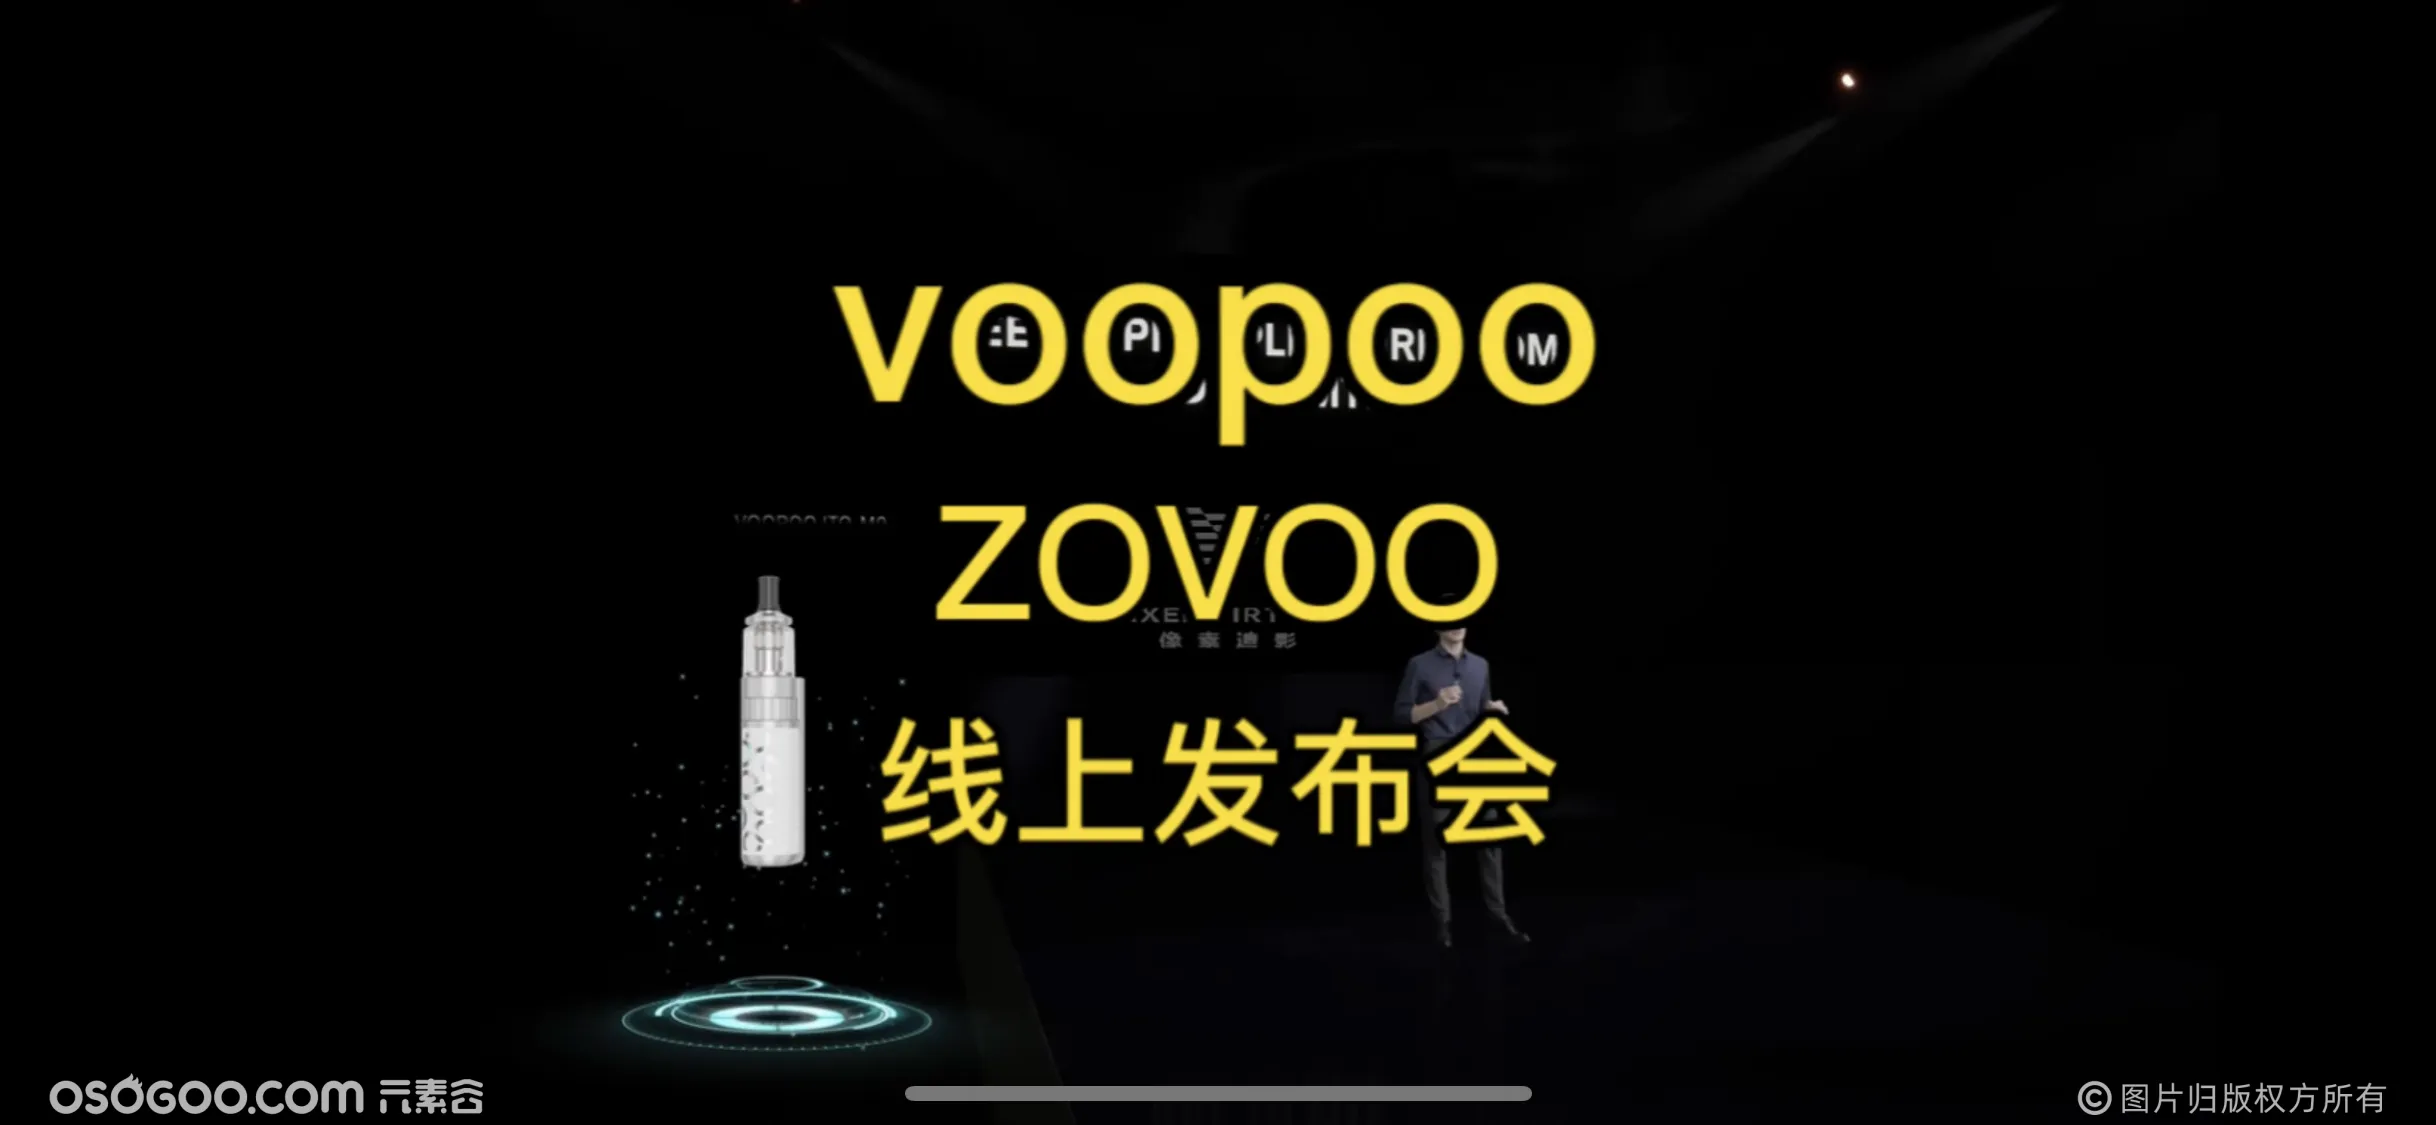 voopoo&zovoo 线上虚拟发布会，绿幕虚拟直播